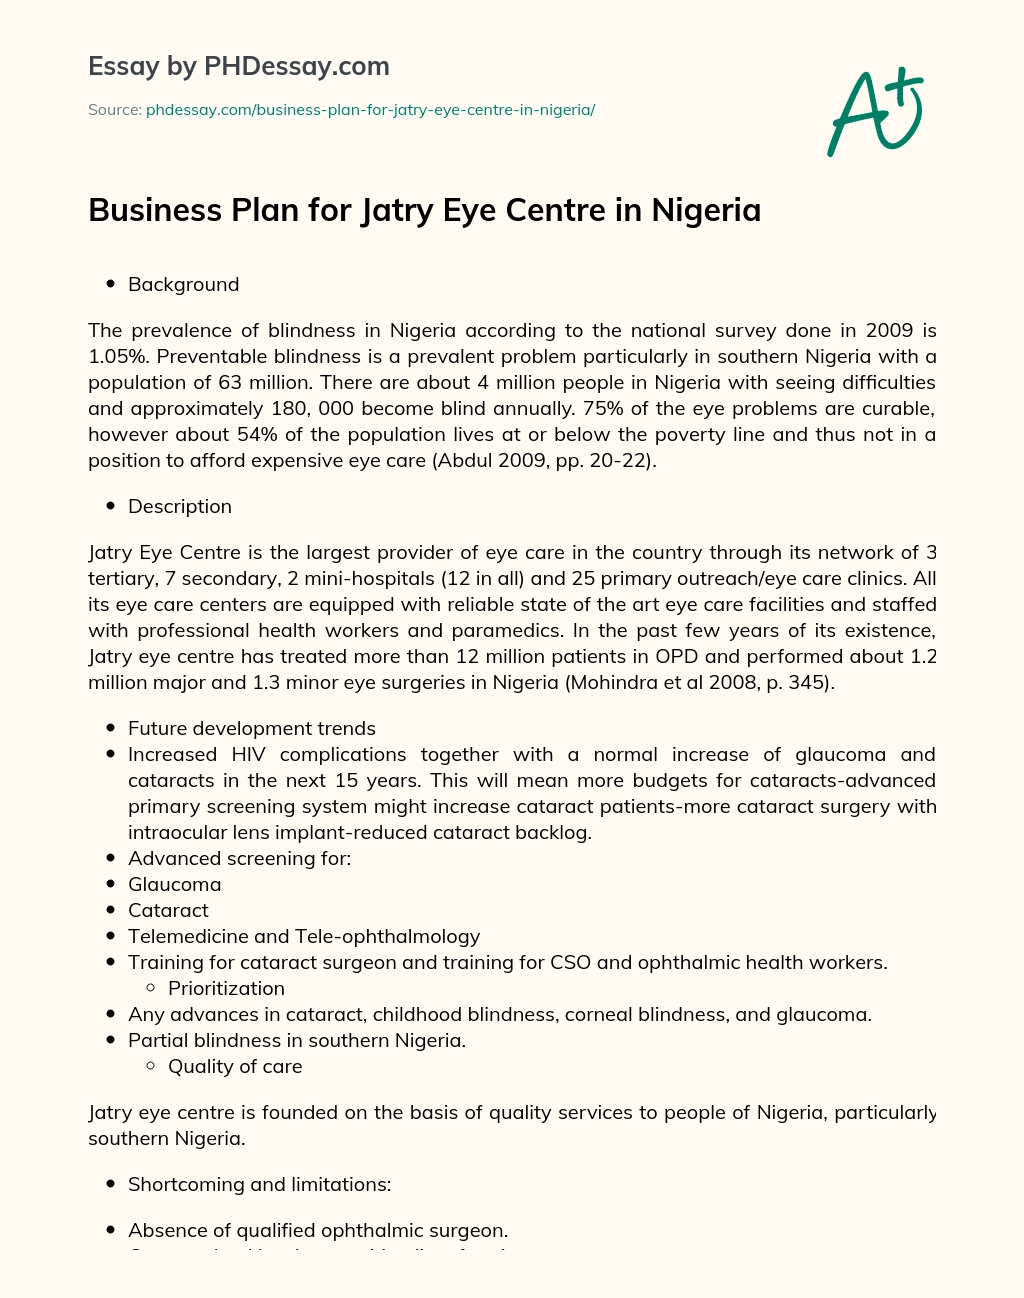 Business Plan for Jatry Eye Centre in Nigeria essay